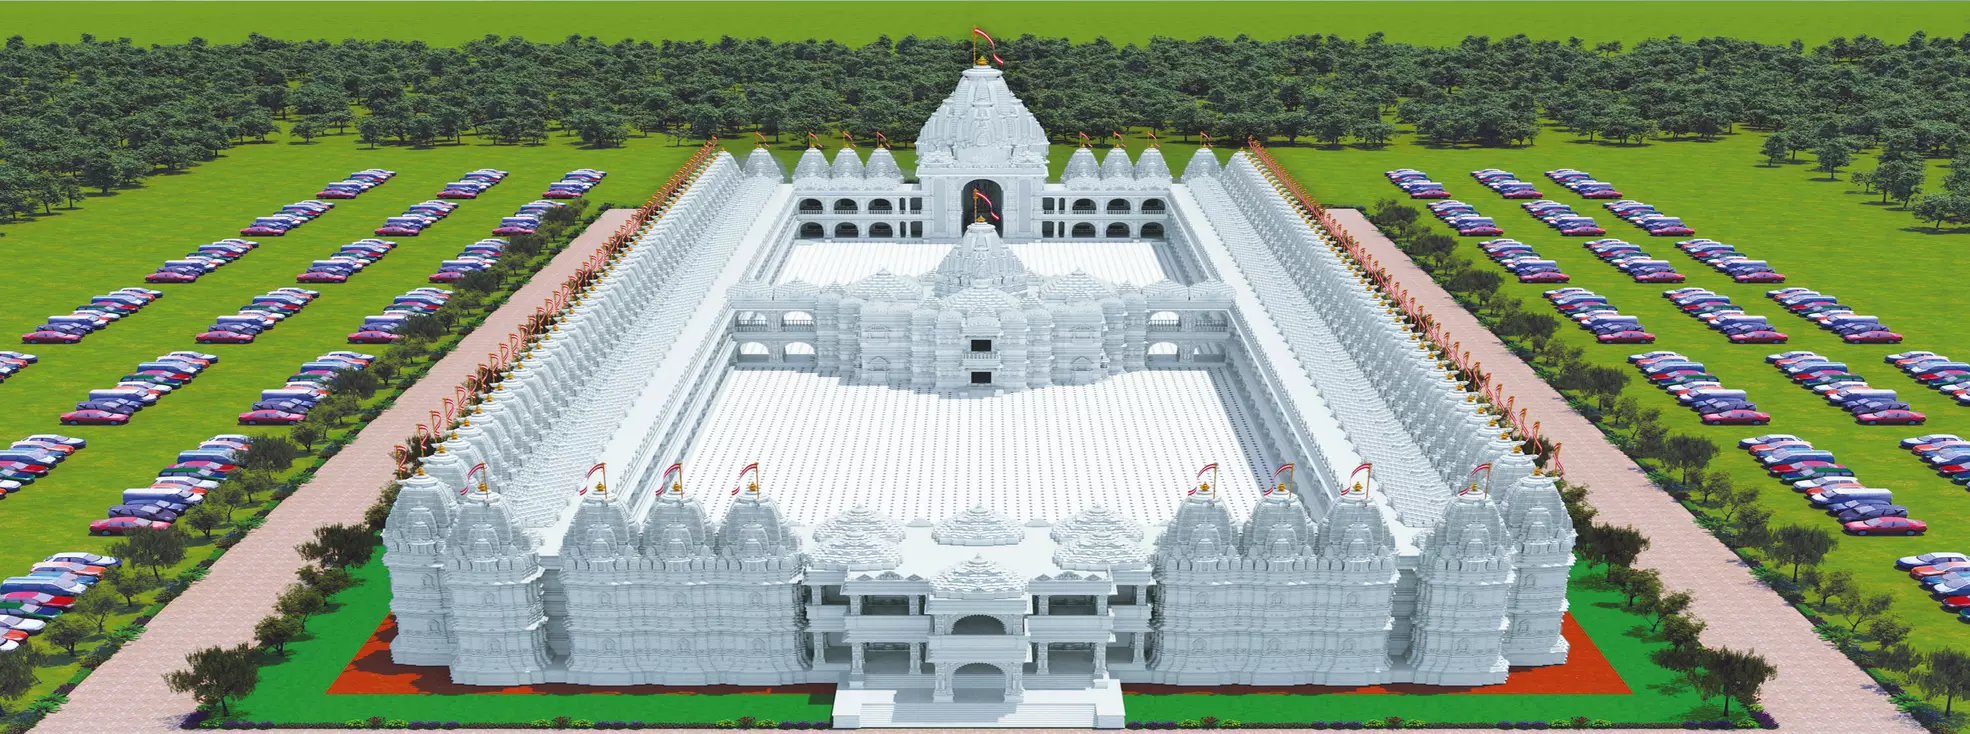 World's largest temple under construction in Panchasar village near Shri Shankheshwar Tirtha in Garvi Gujarat.